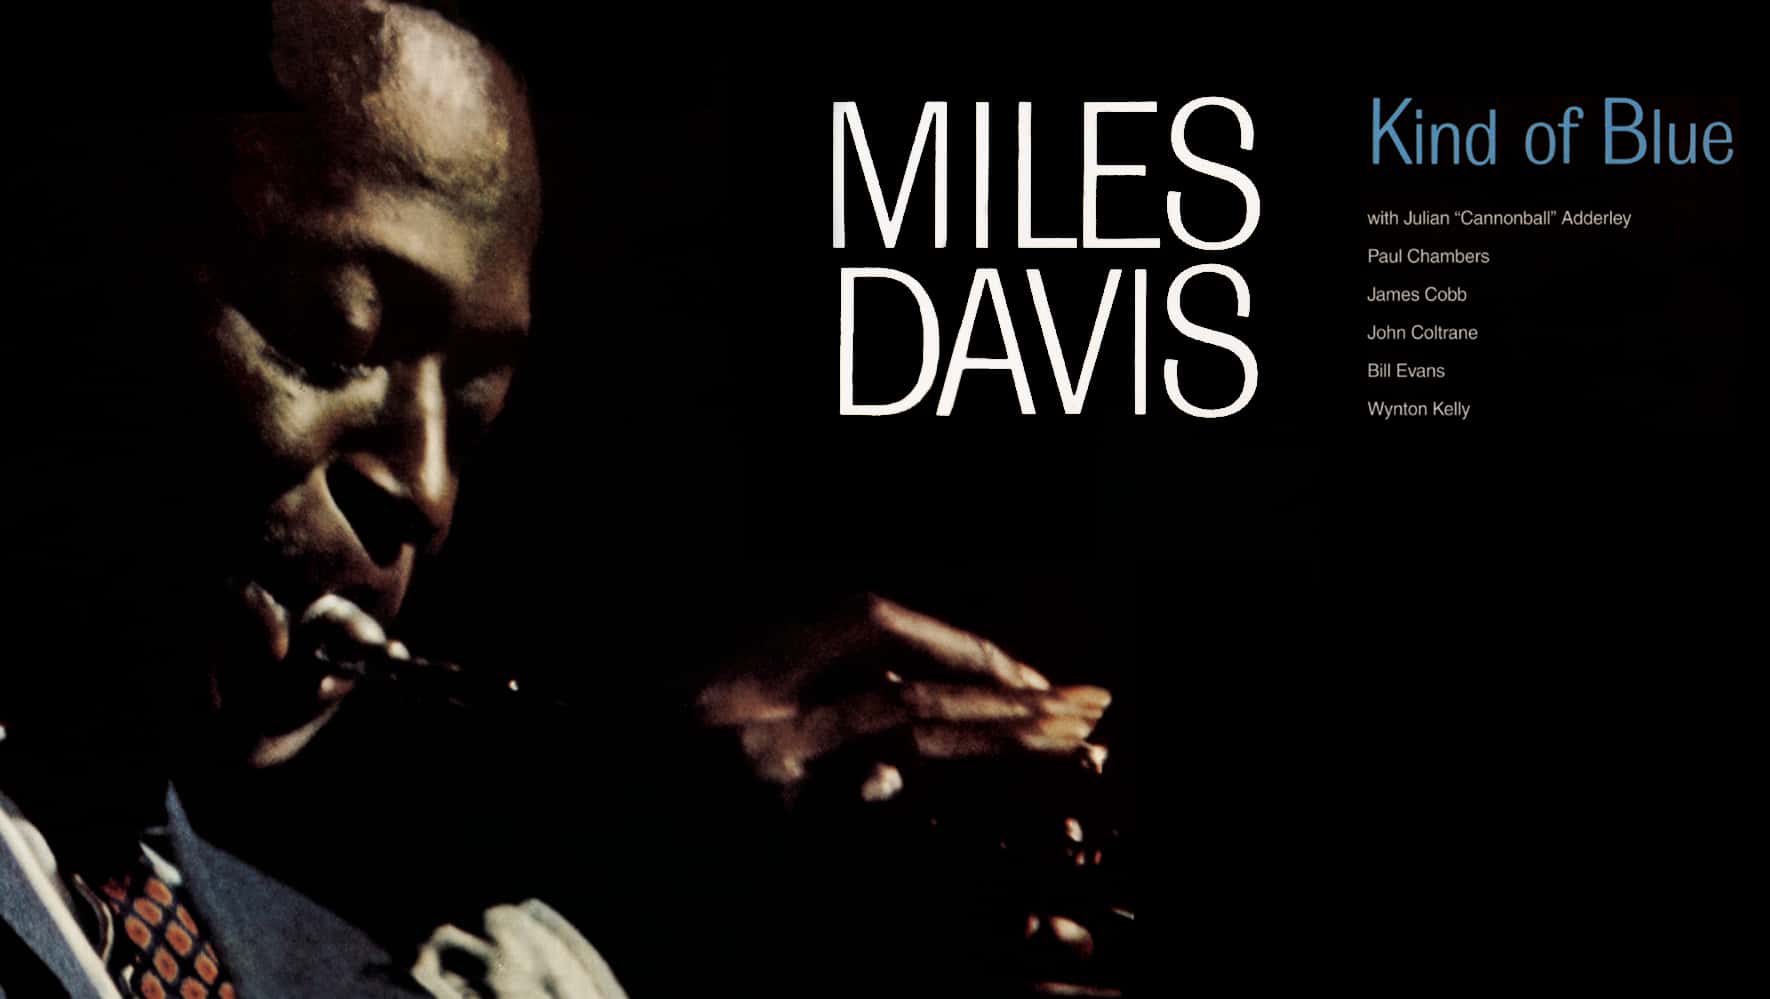 Miles Davis facts